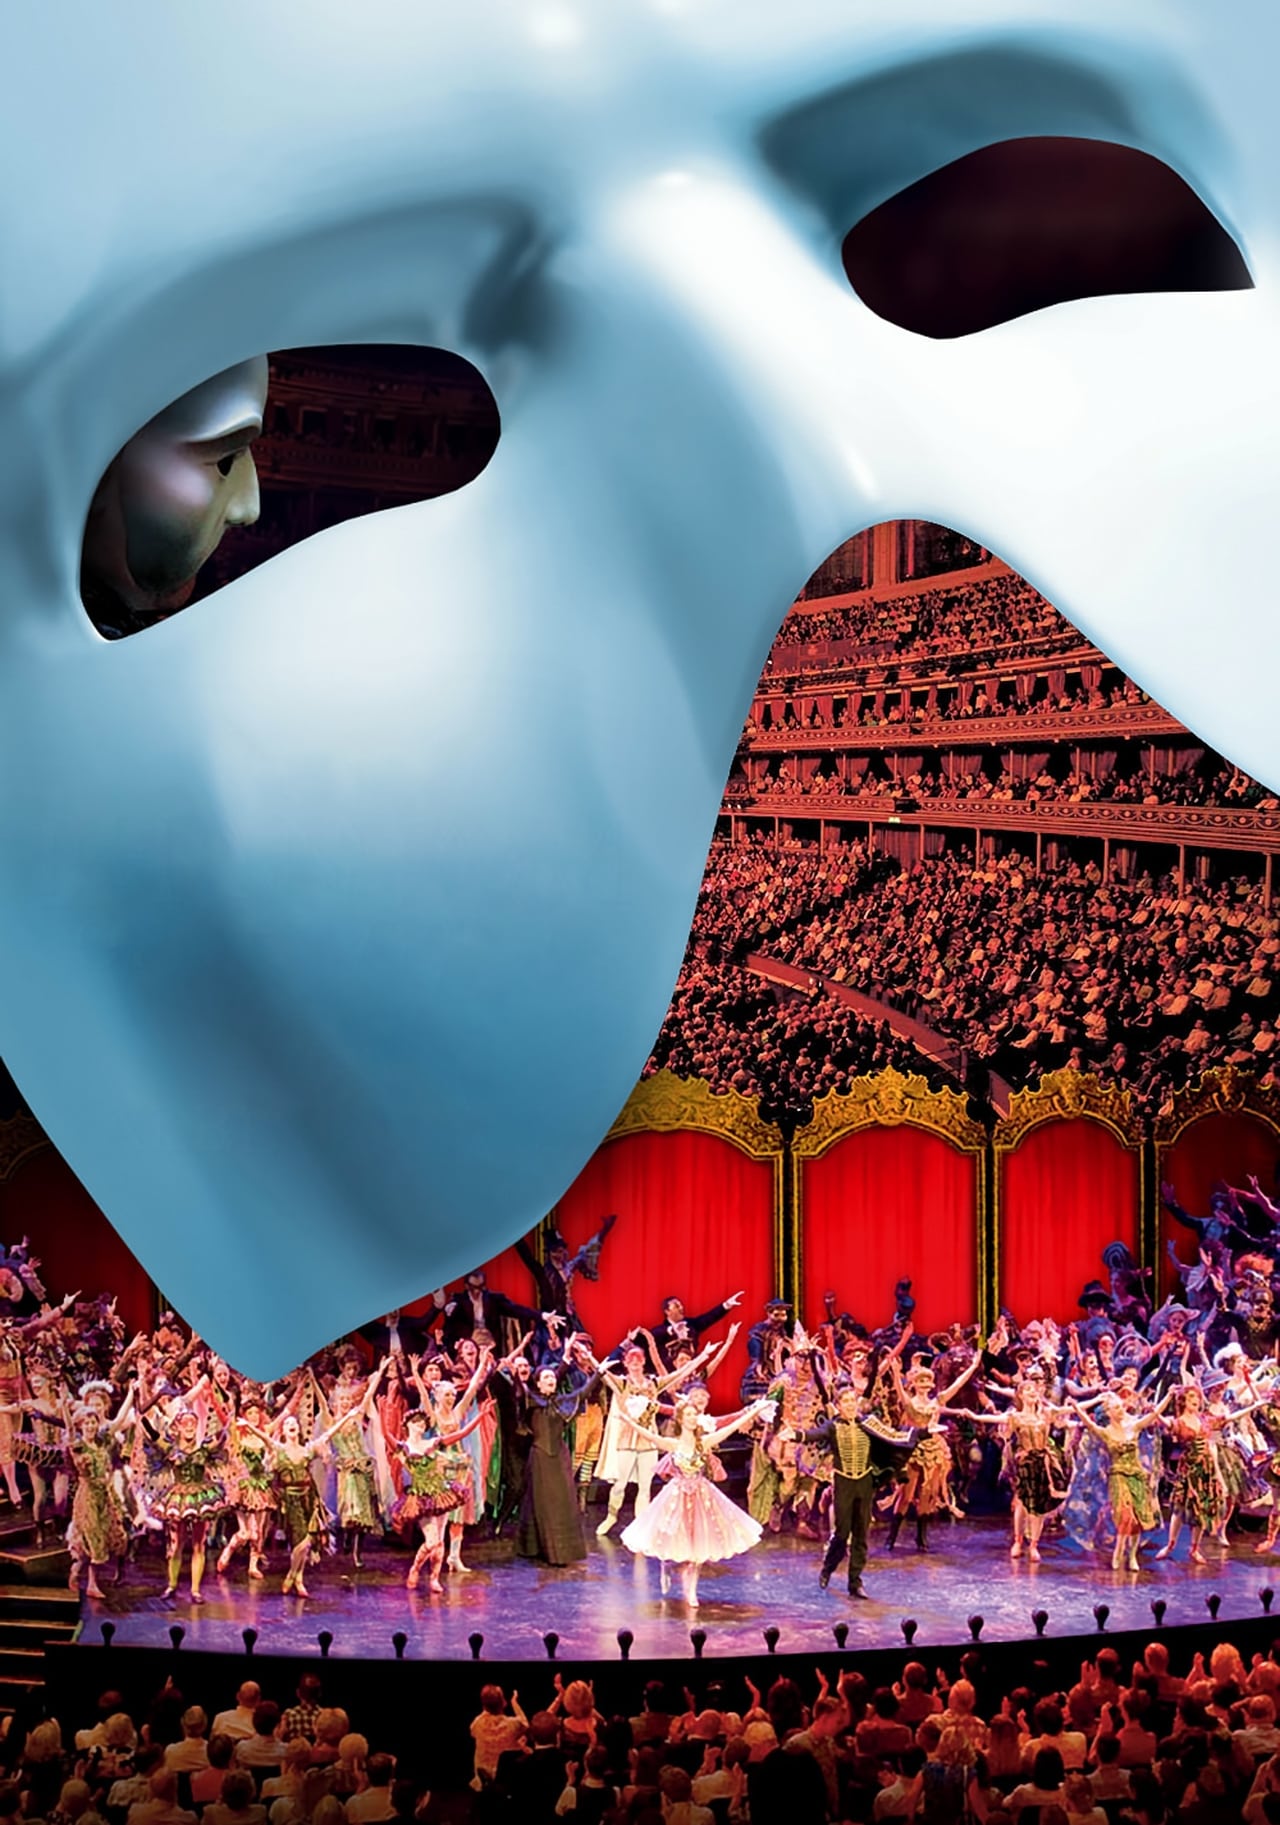 phantom of the opera